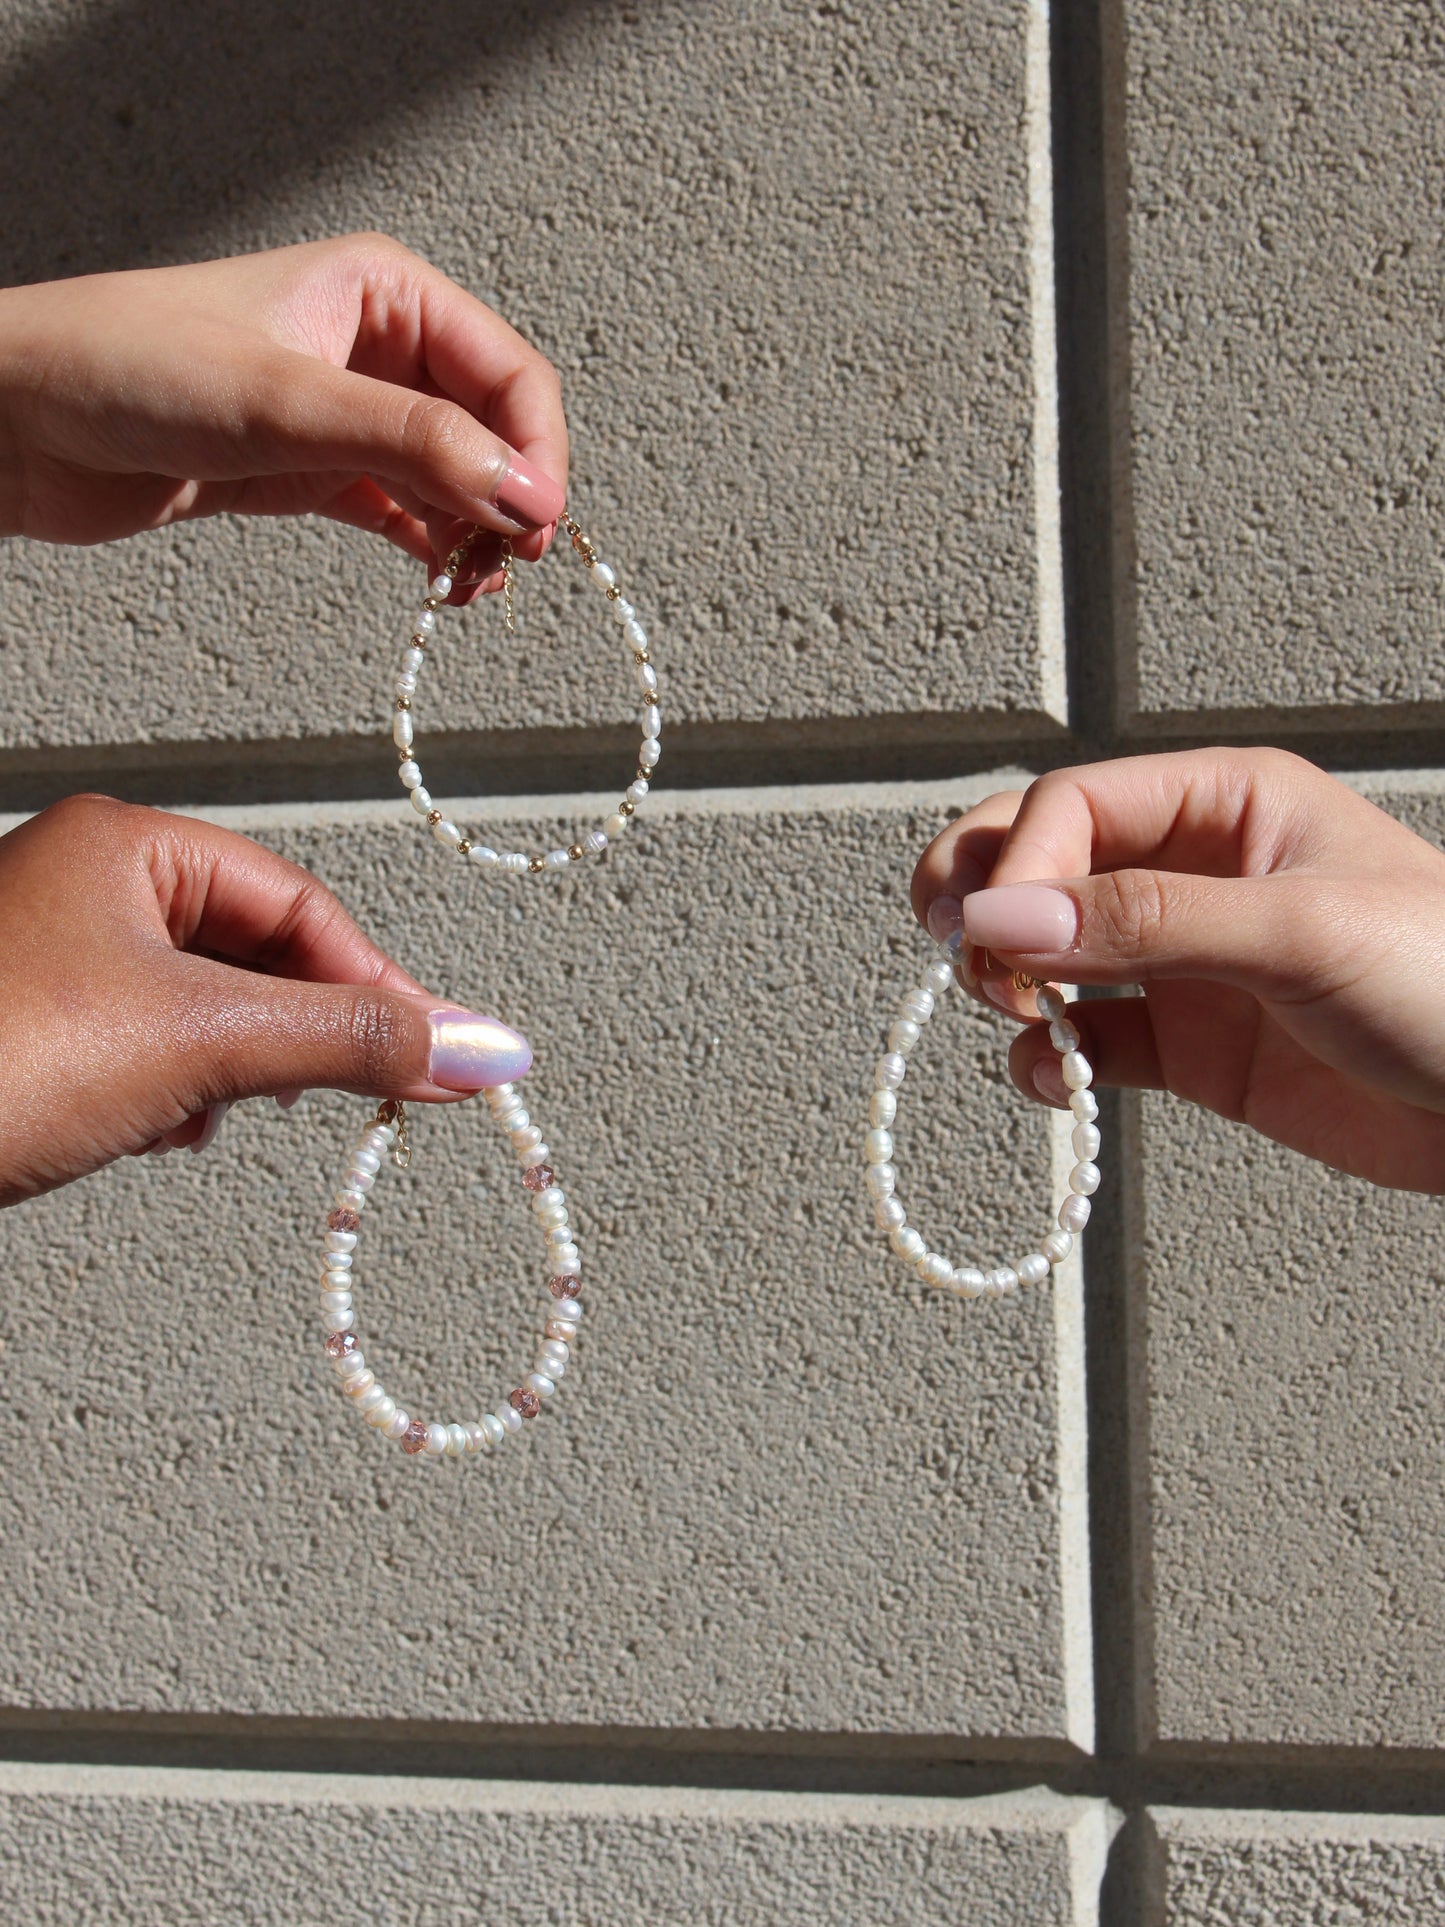 Sachi pearl bracelet - pink